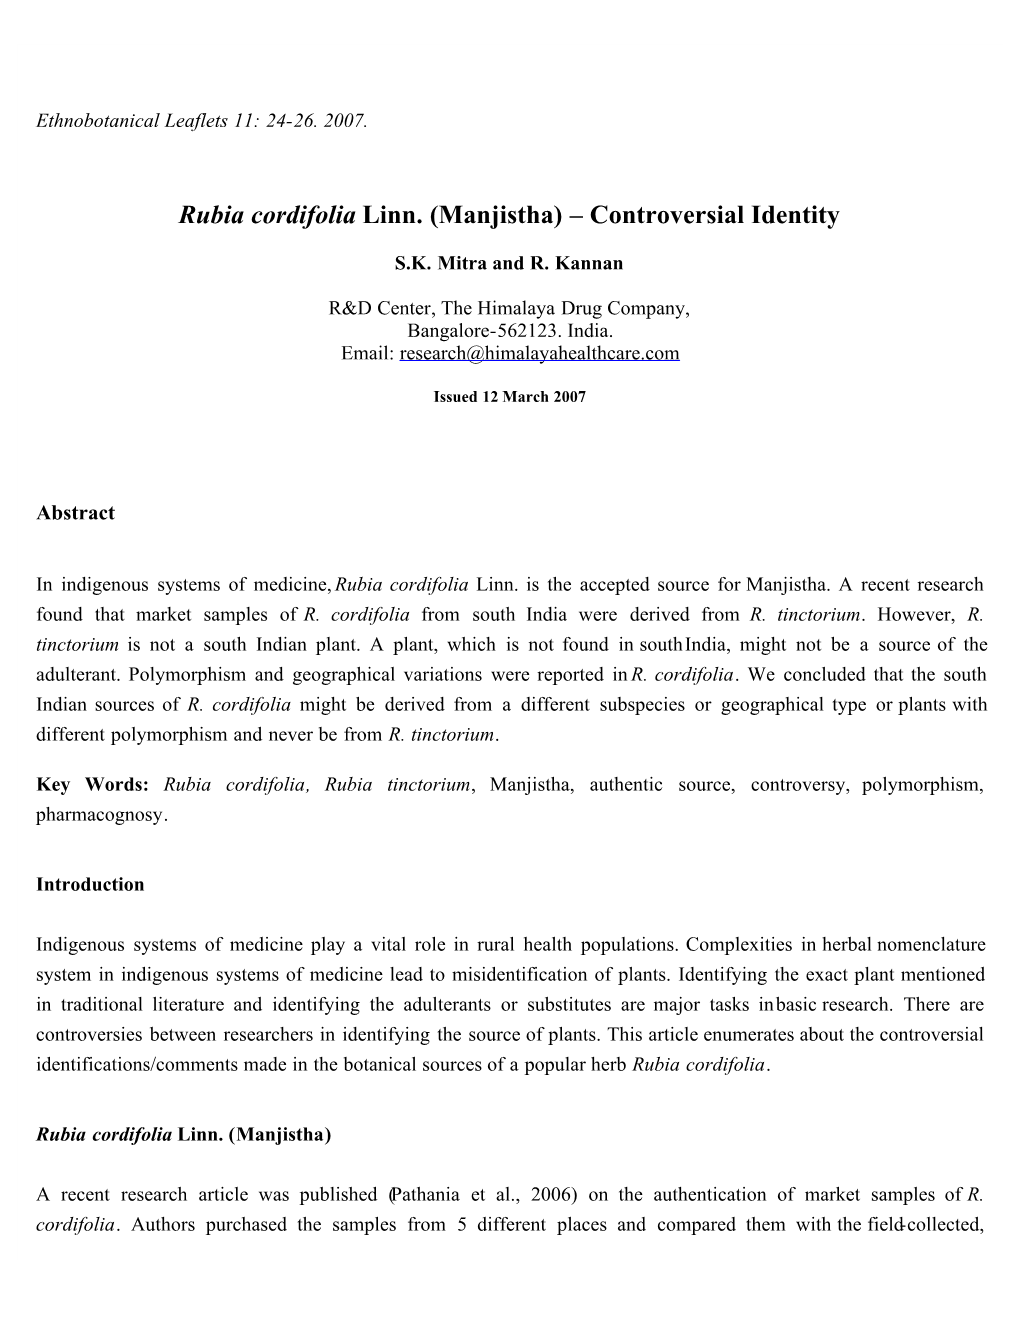 Rubia Cordifolia Linn. (Manjistha) – Controversial Identity